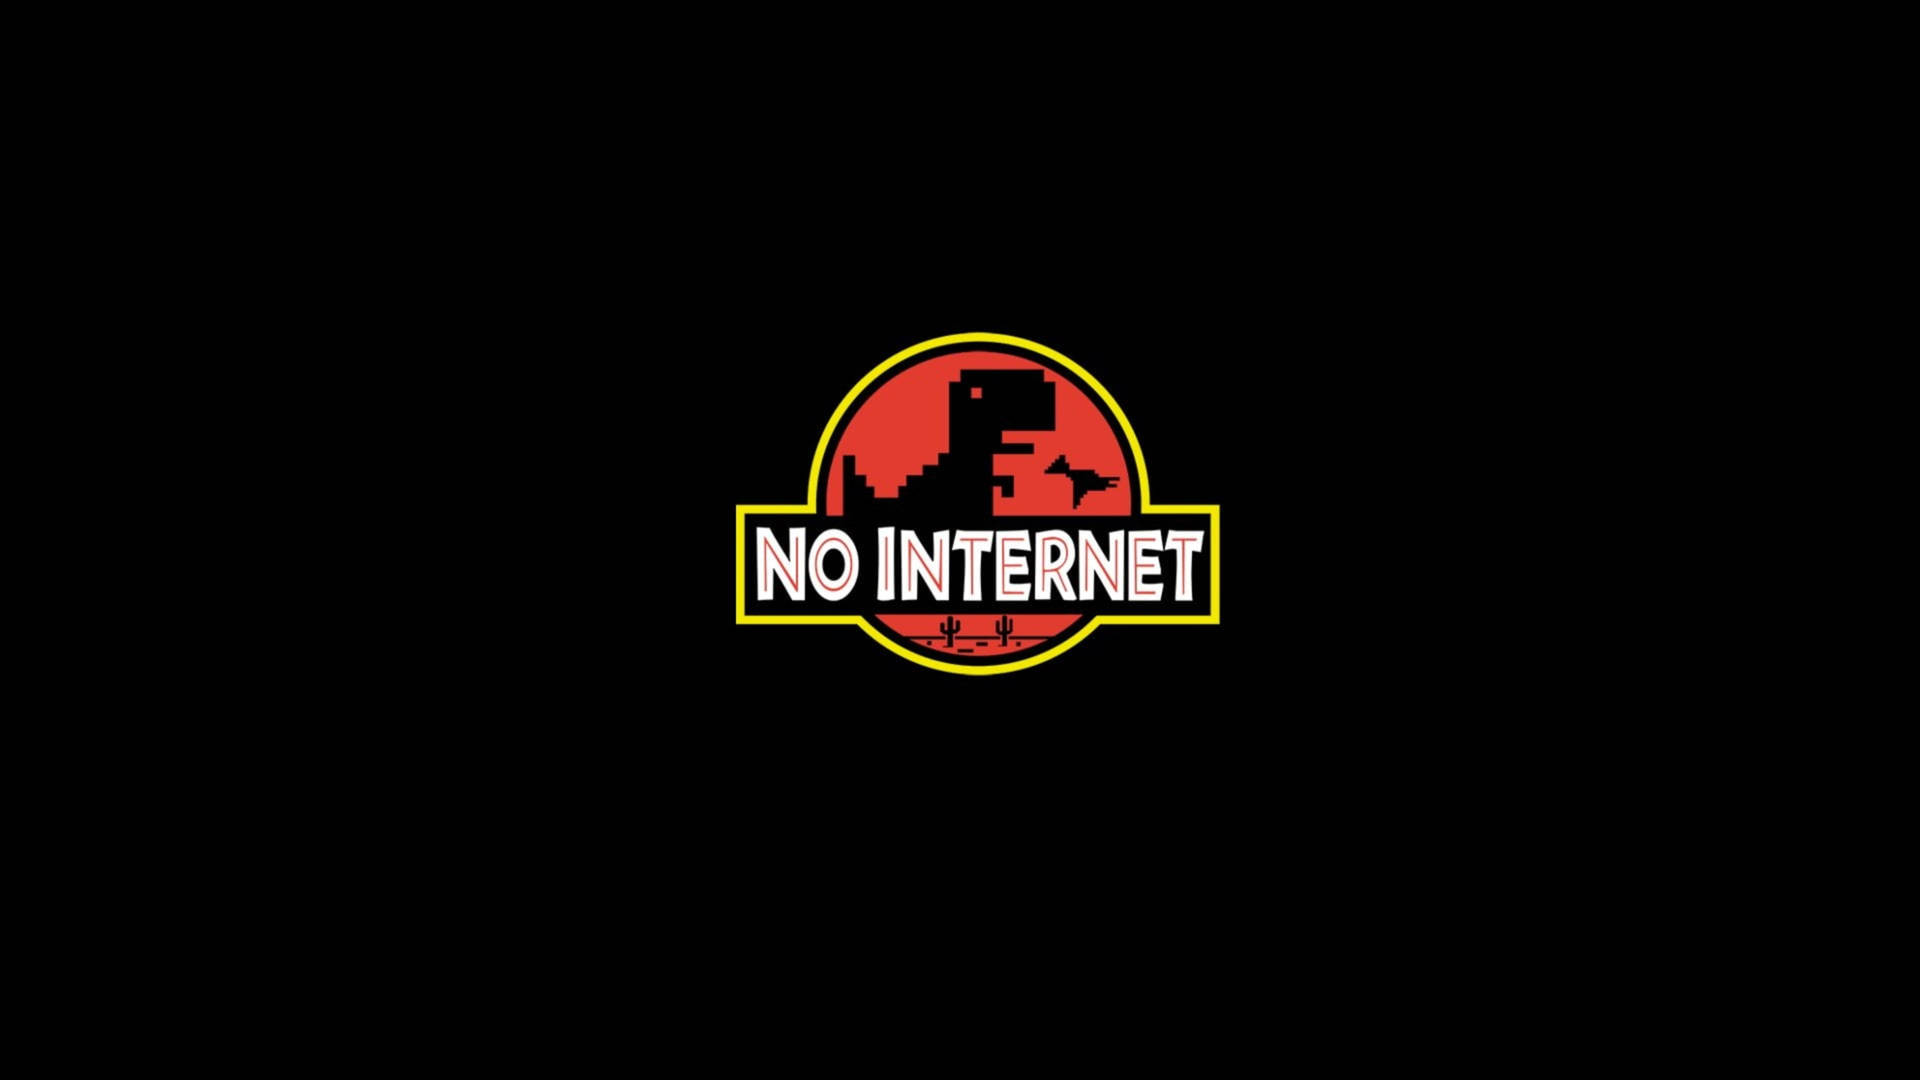 No Internet Jurassic Park Dank Meme wallpaper